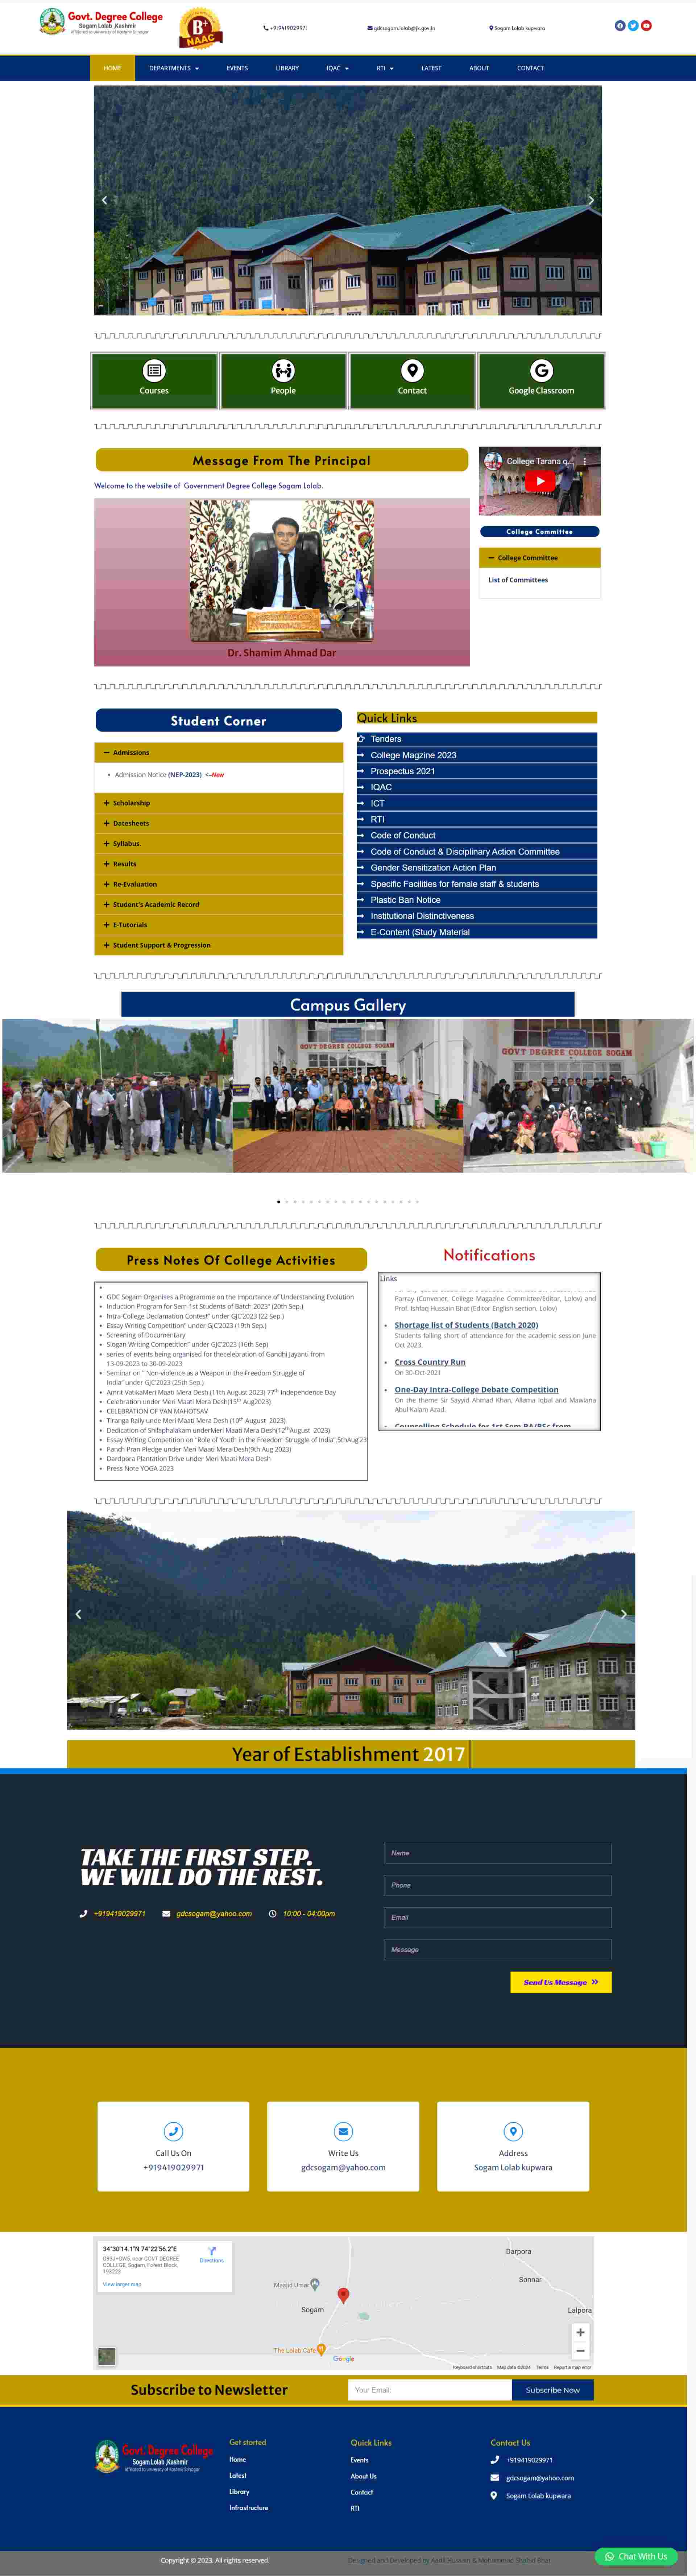 Sogam college Educational website portfolio by elyspace 